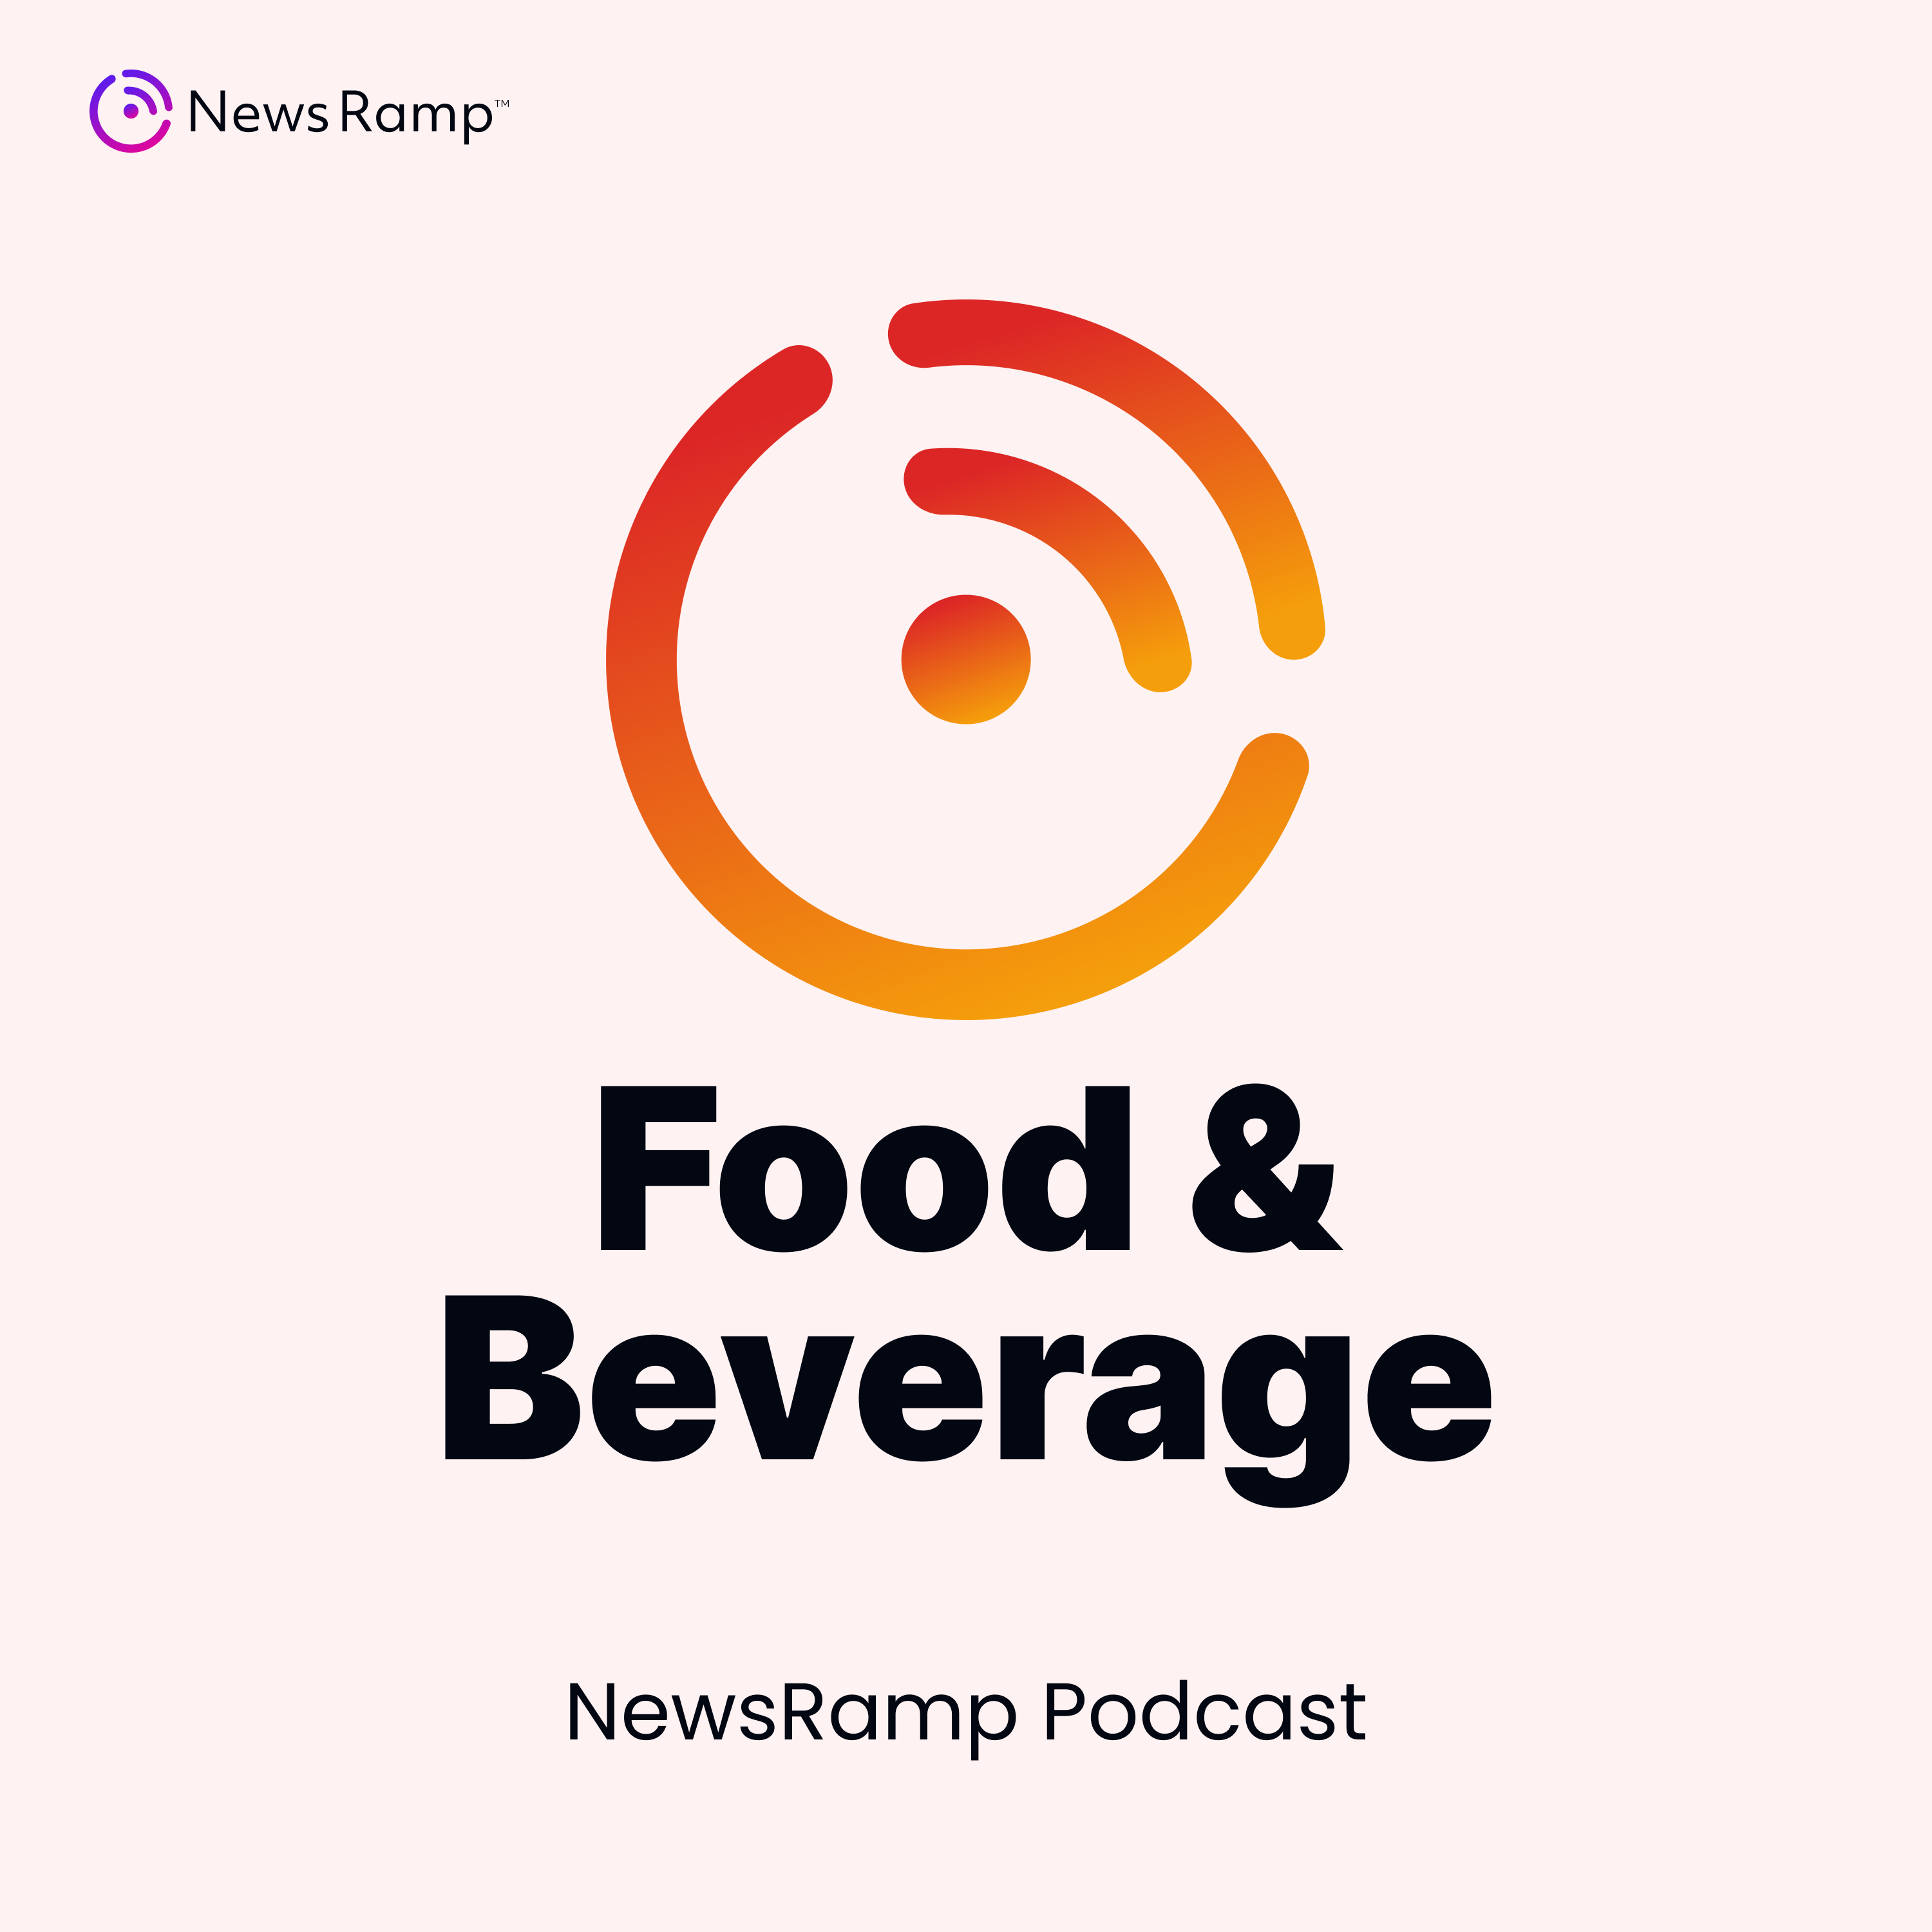 NewsRamp Food & Beverage Podcast